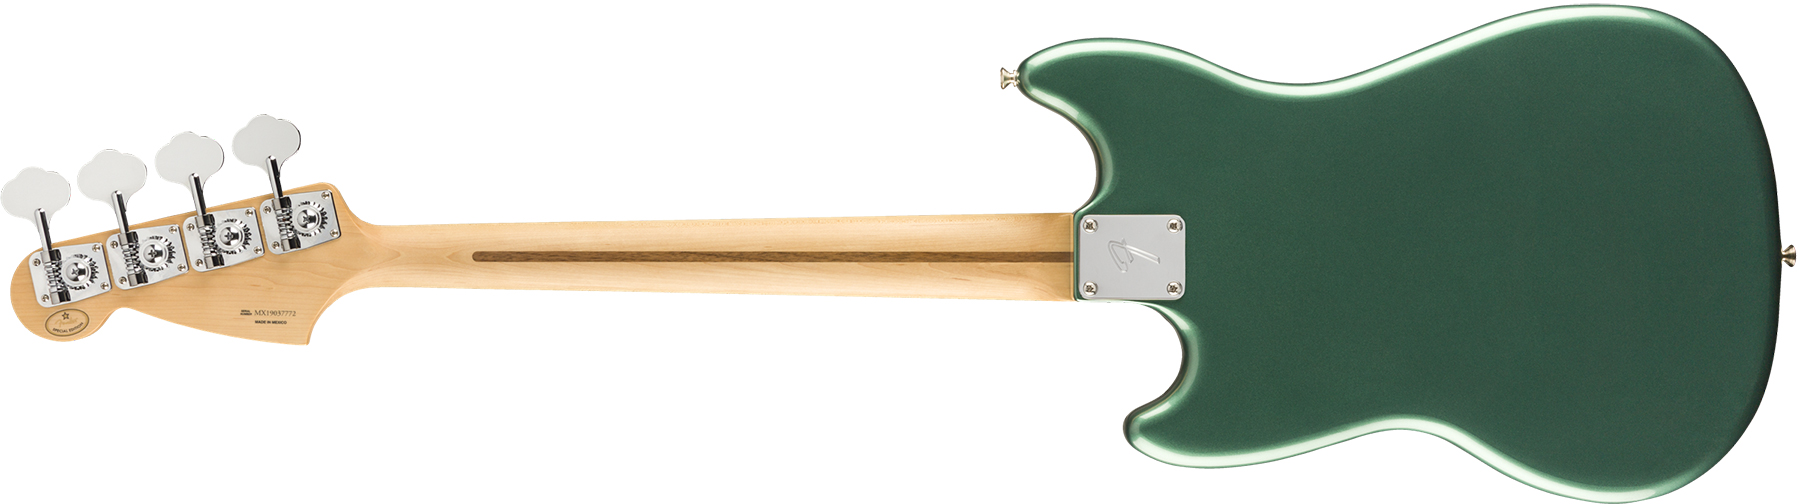 Fender Mustang Bass Pj Player Ltd Mex Pf - Sherwood Green Metallic - Bajo eléctrico para niños - Variation 1